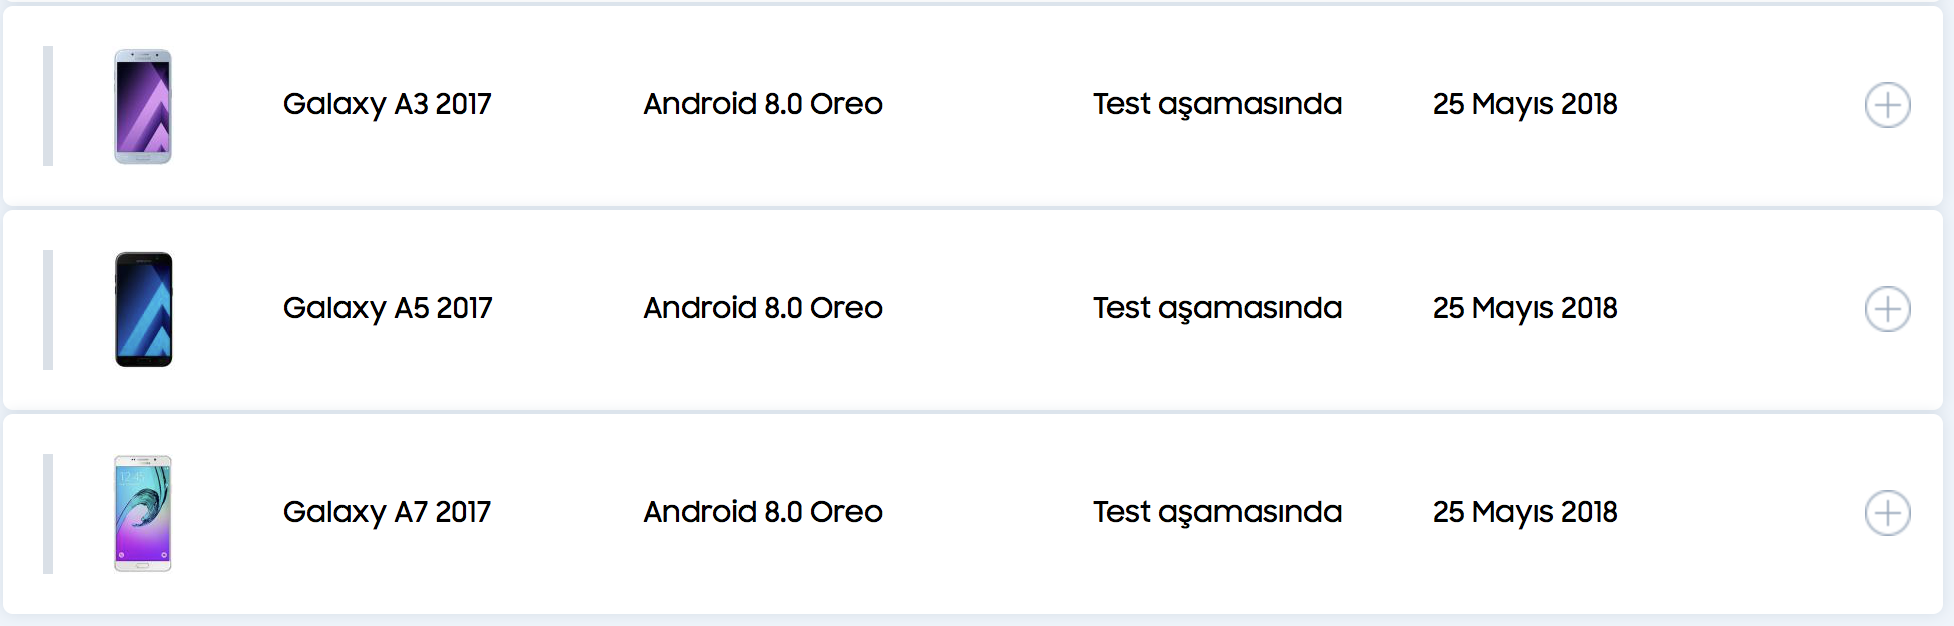 Galaxy A3, A5 und A7: Samsungs A-Serie erhält das Update auf Android 8.0 Oreo